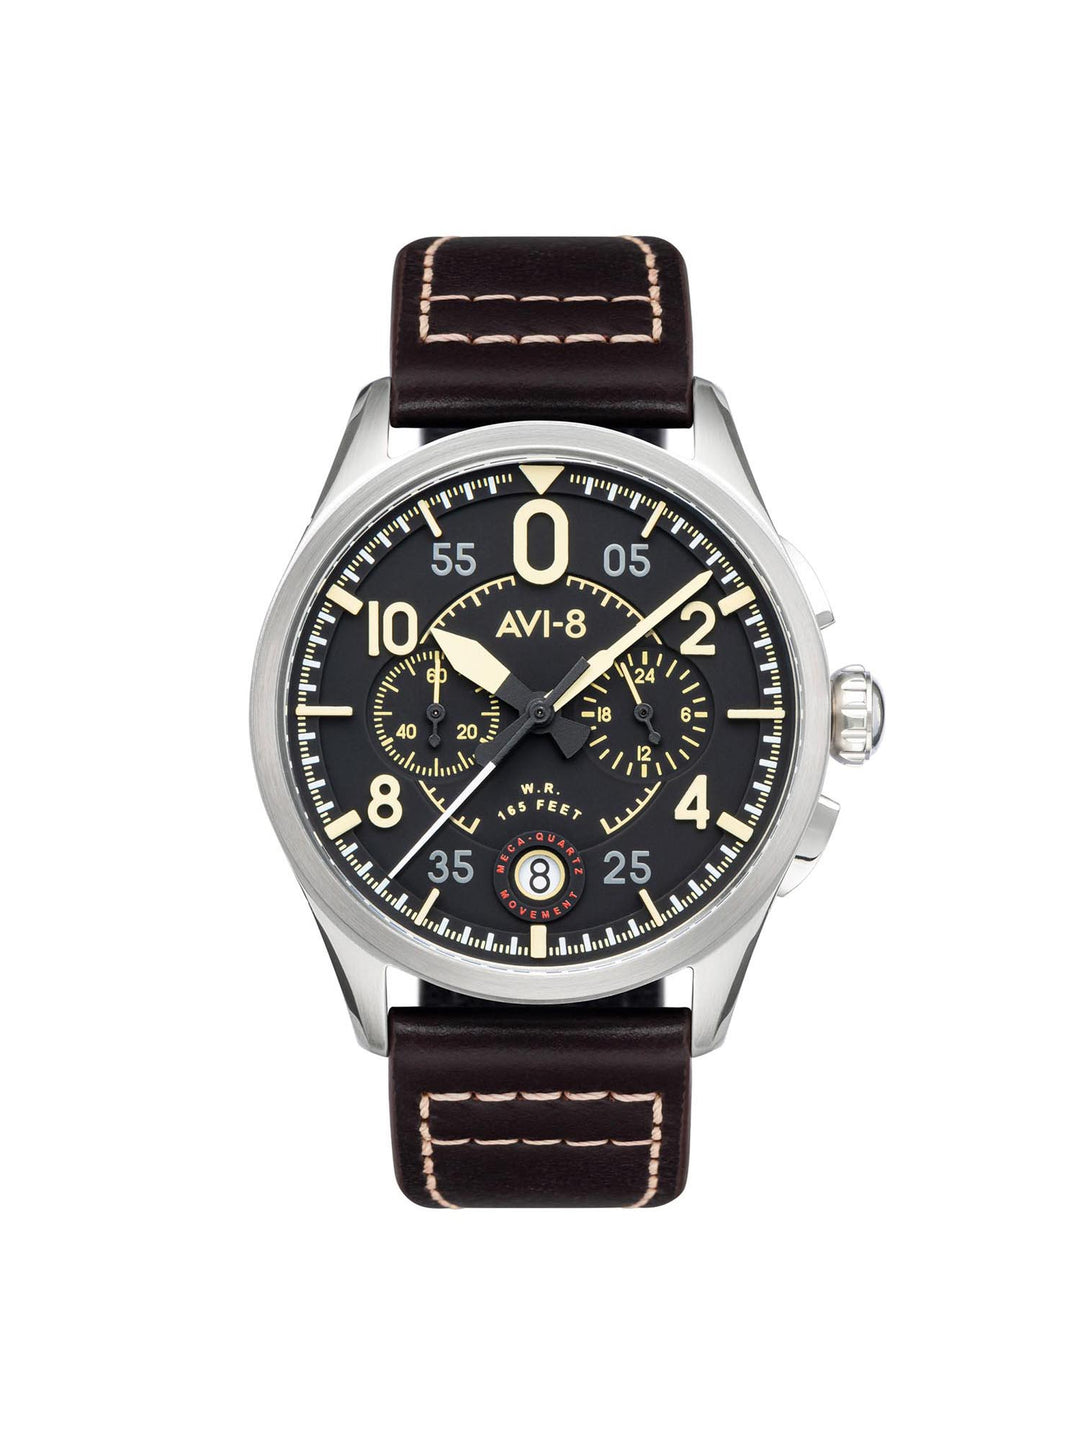 Spitfire Chronograph Men's Watch - AV-4089-01